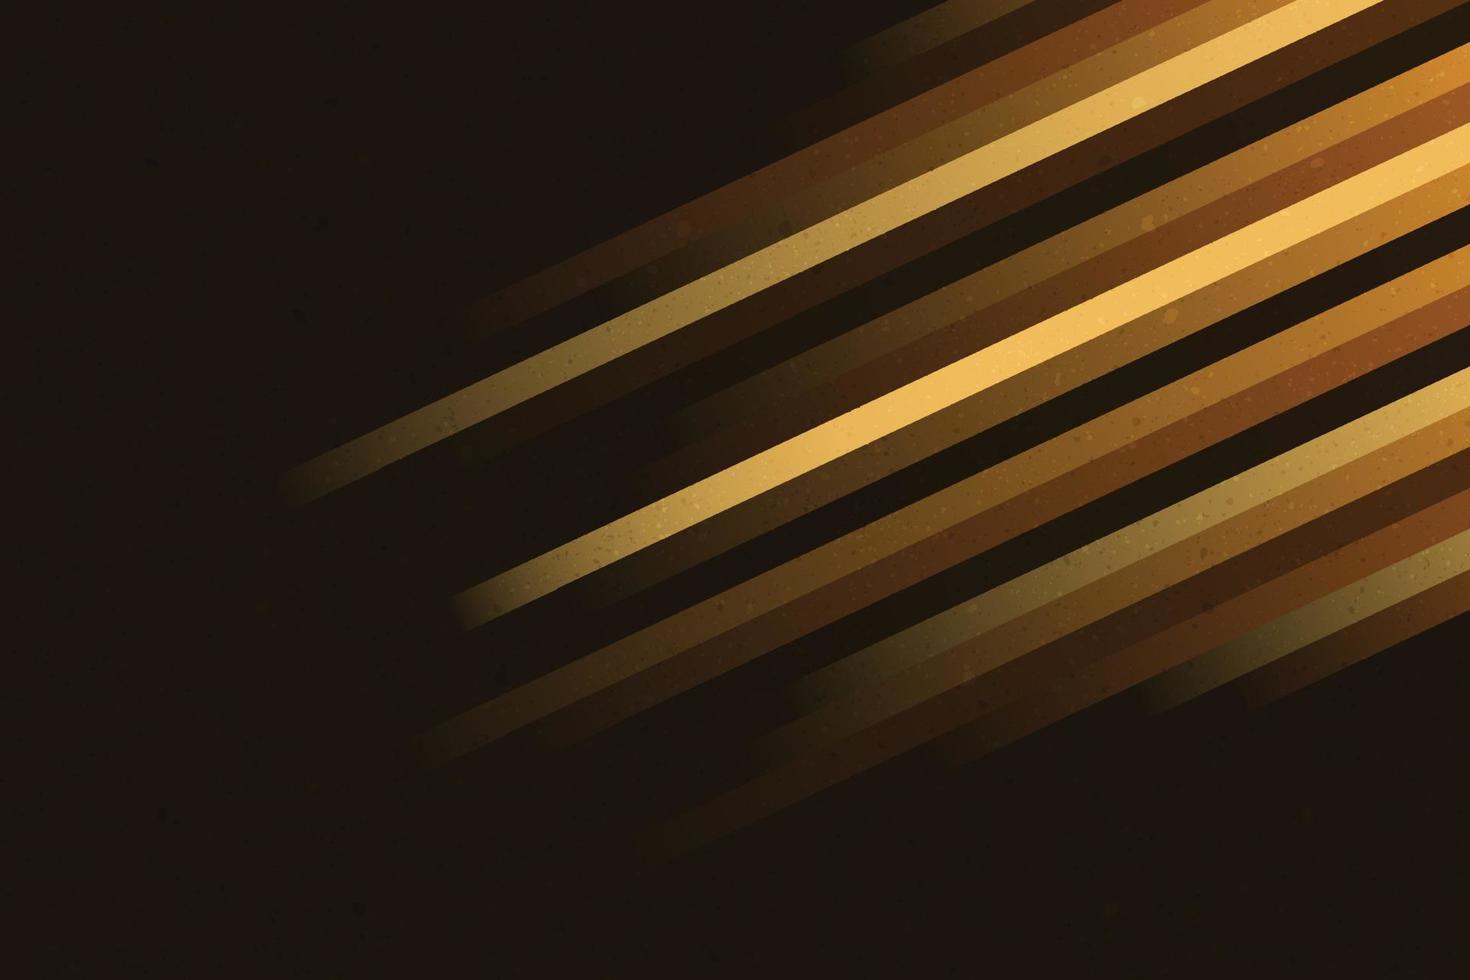 abstrato linear retrô vector de fundo. linhas diagonais gradientes amarelas, pretas e marrons em estilo abstrato